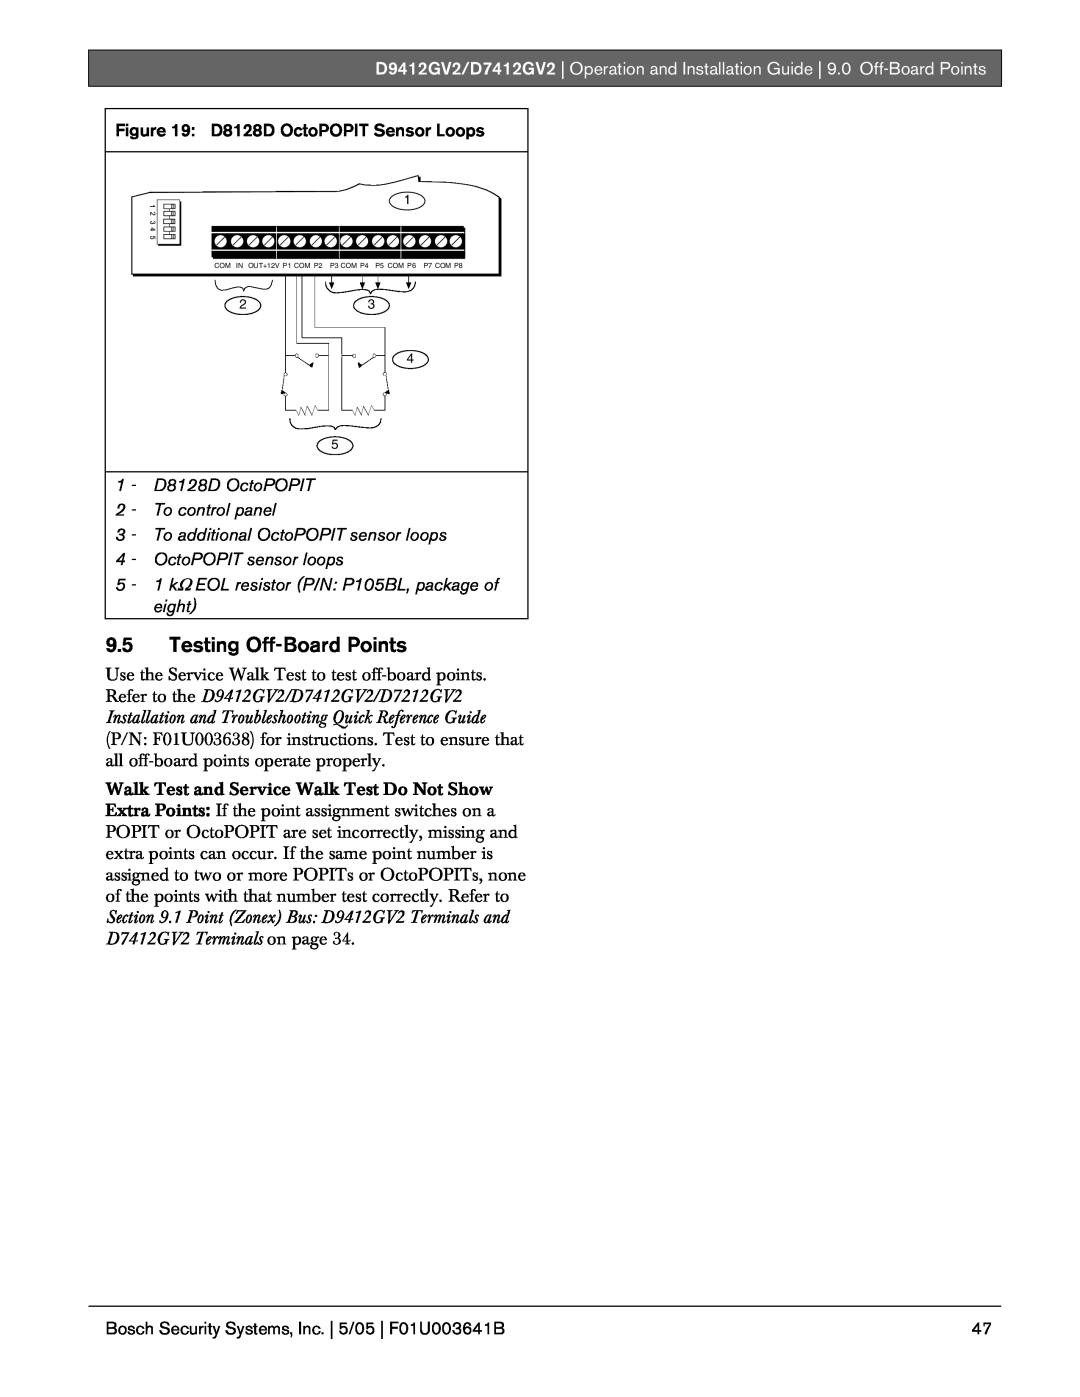 Bosch Appliances D9412GV2 manual 9.5Testing Off-BoardPoints, D8128D OctoPOPIT Sensor Loops 